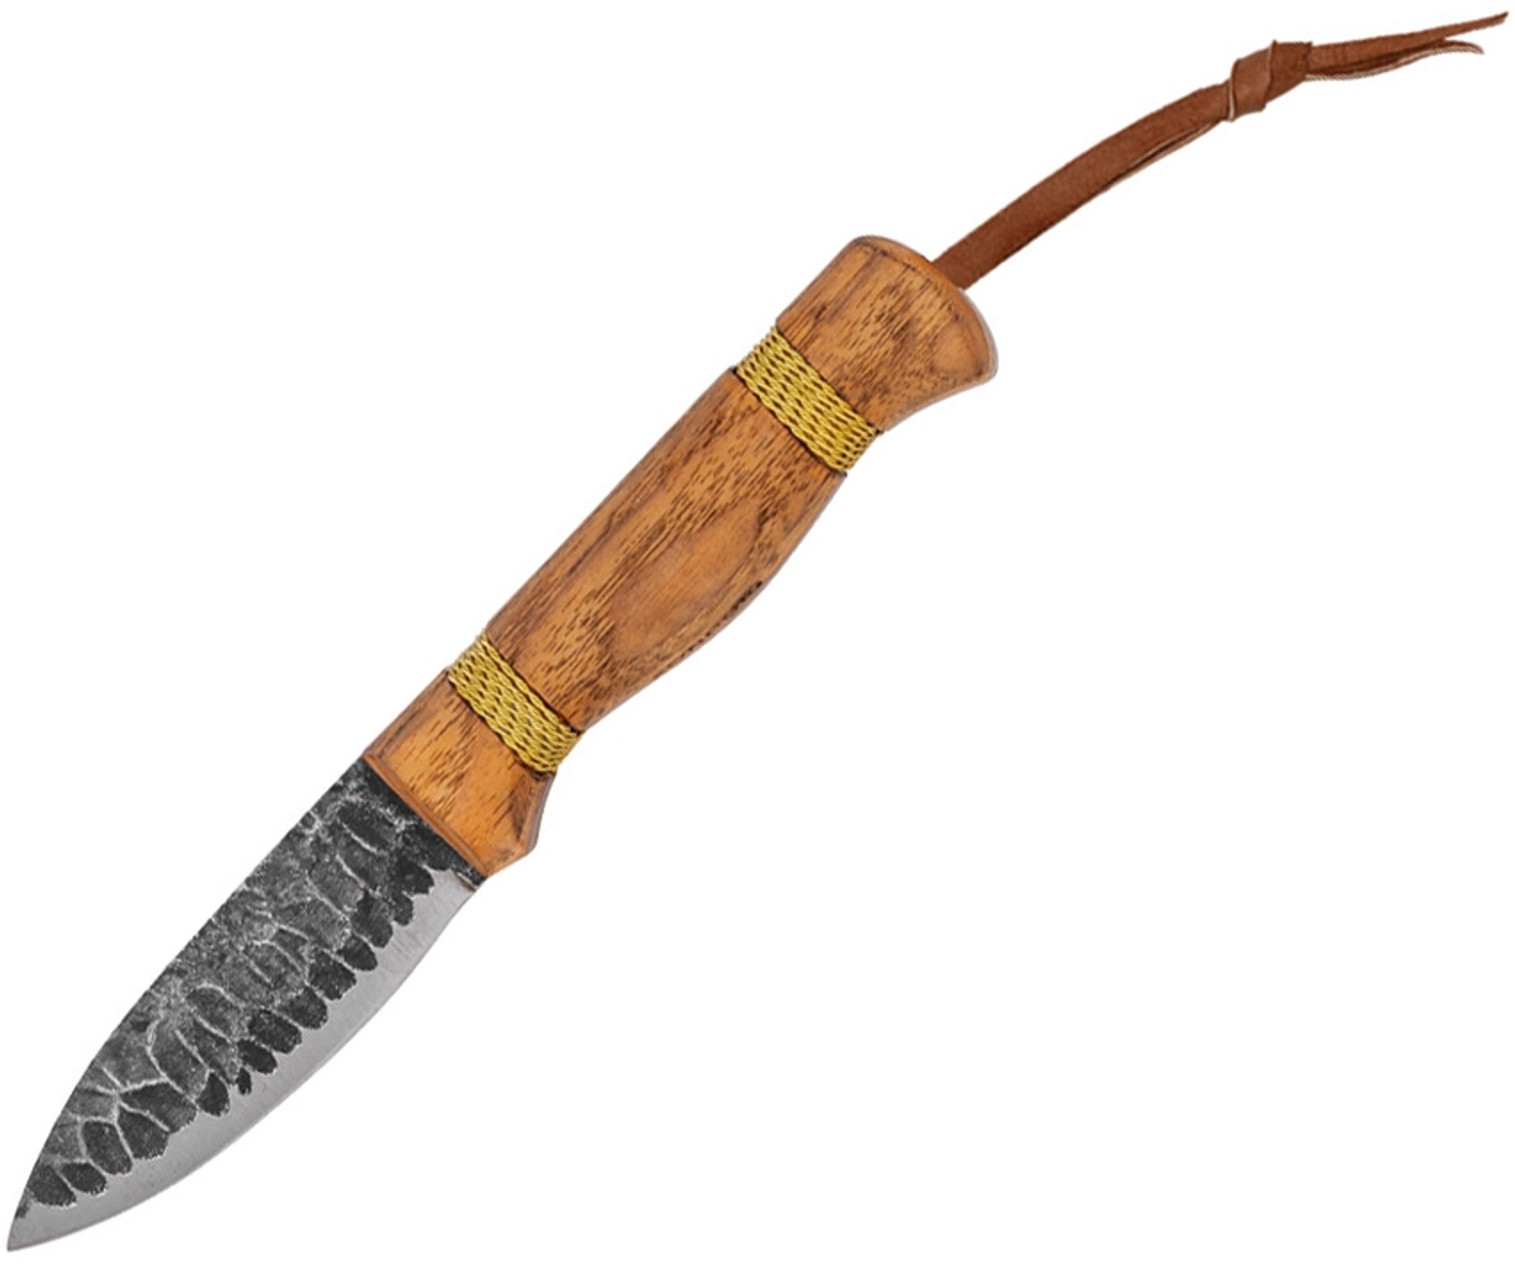 Cavelore Knife